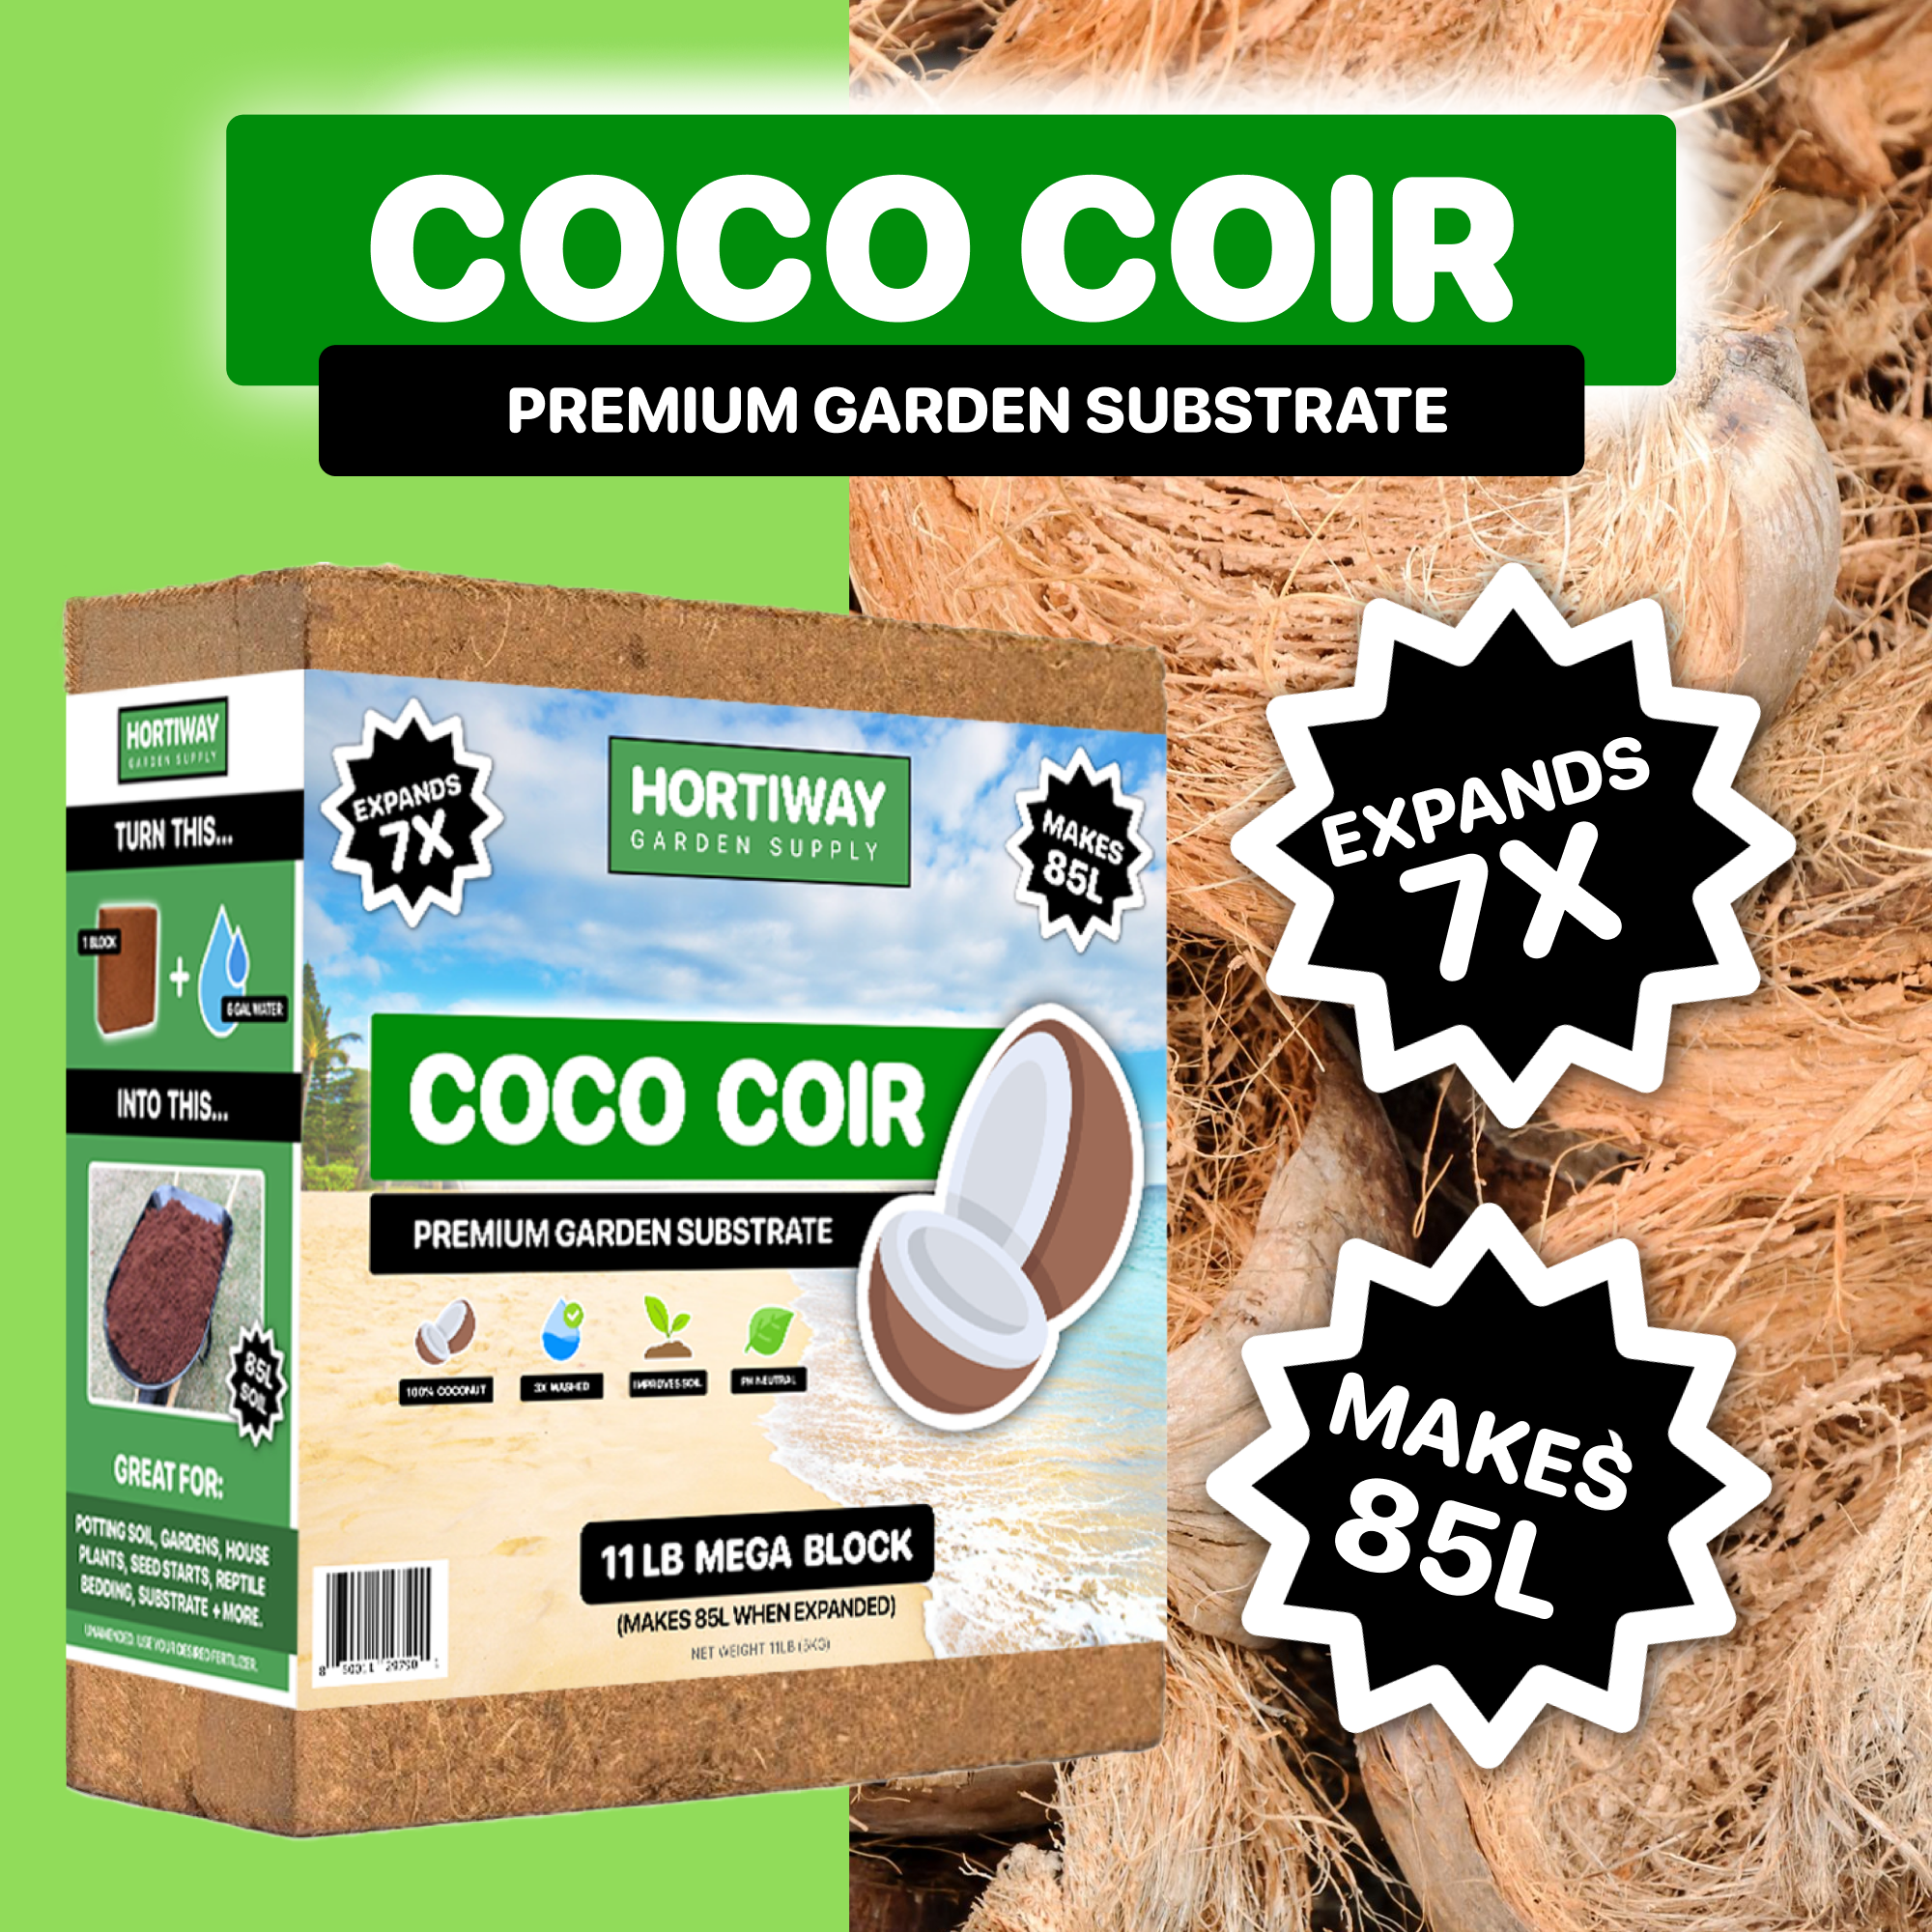 a box of coco coir - expands 7x - makes 85L